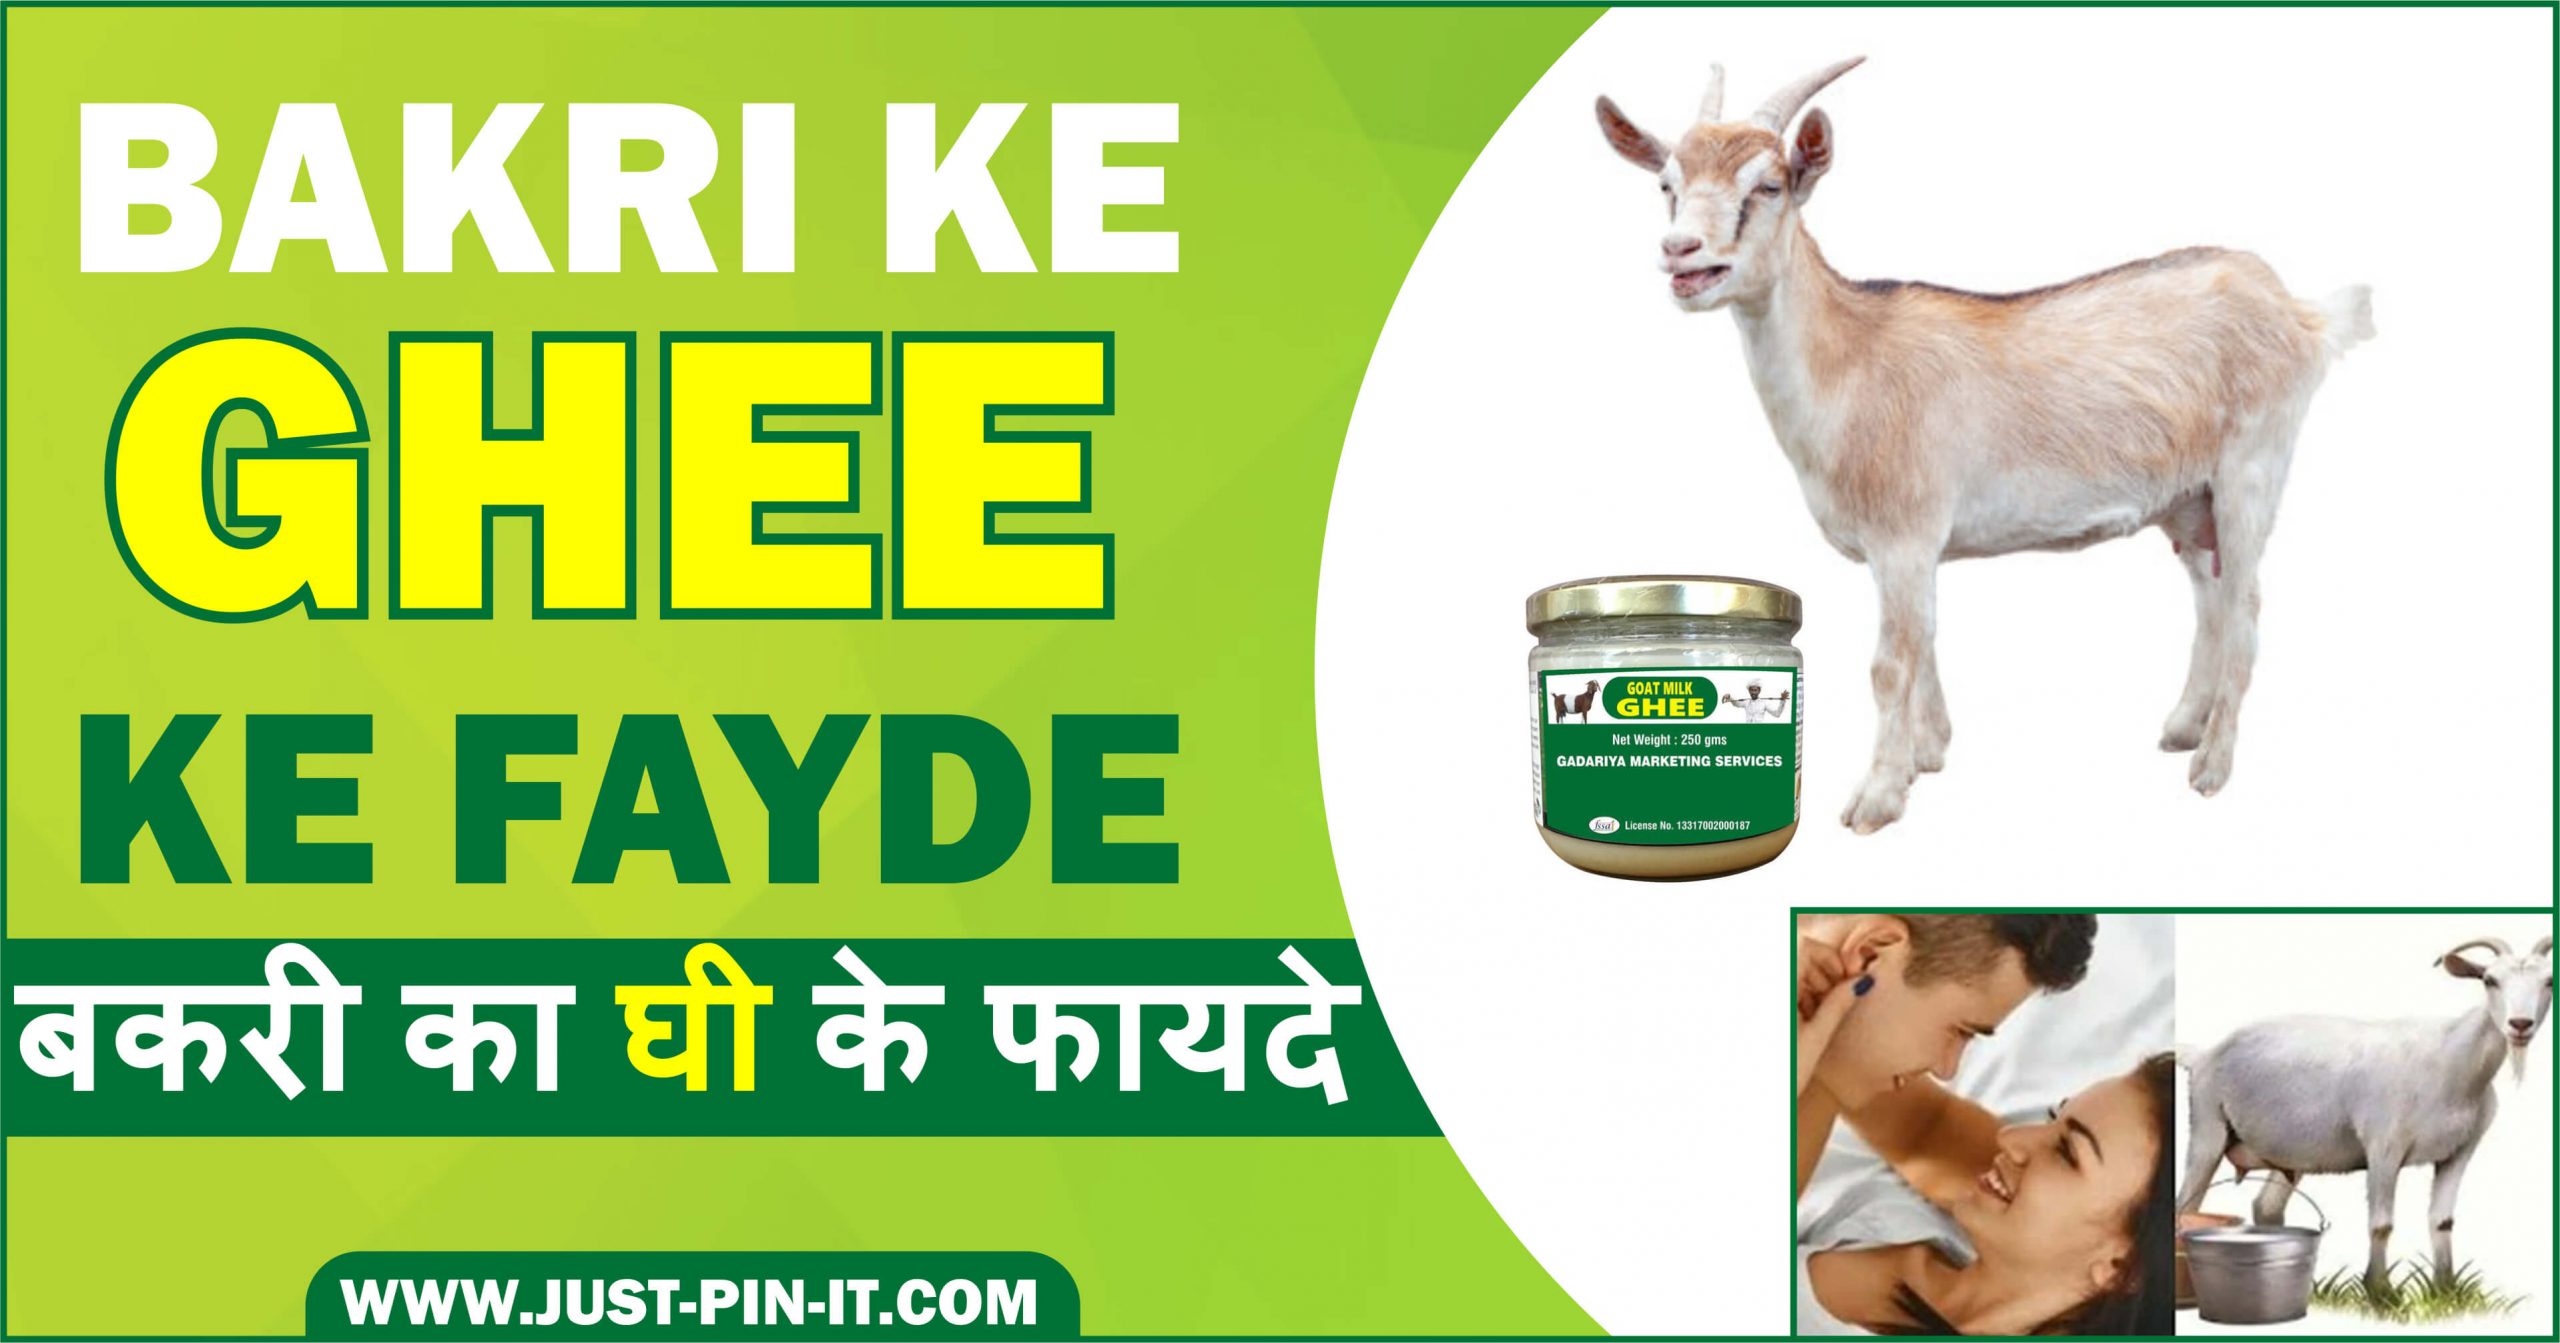 Bakri ka ghee ke fayde - बकरी का घी के फायदे Bakri ke ghee ke fayde - बकरी के घी के फायदे goat ghee benefits goat ghee benefits in hindi